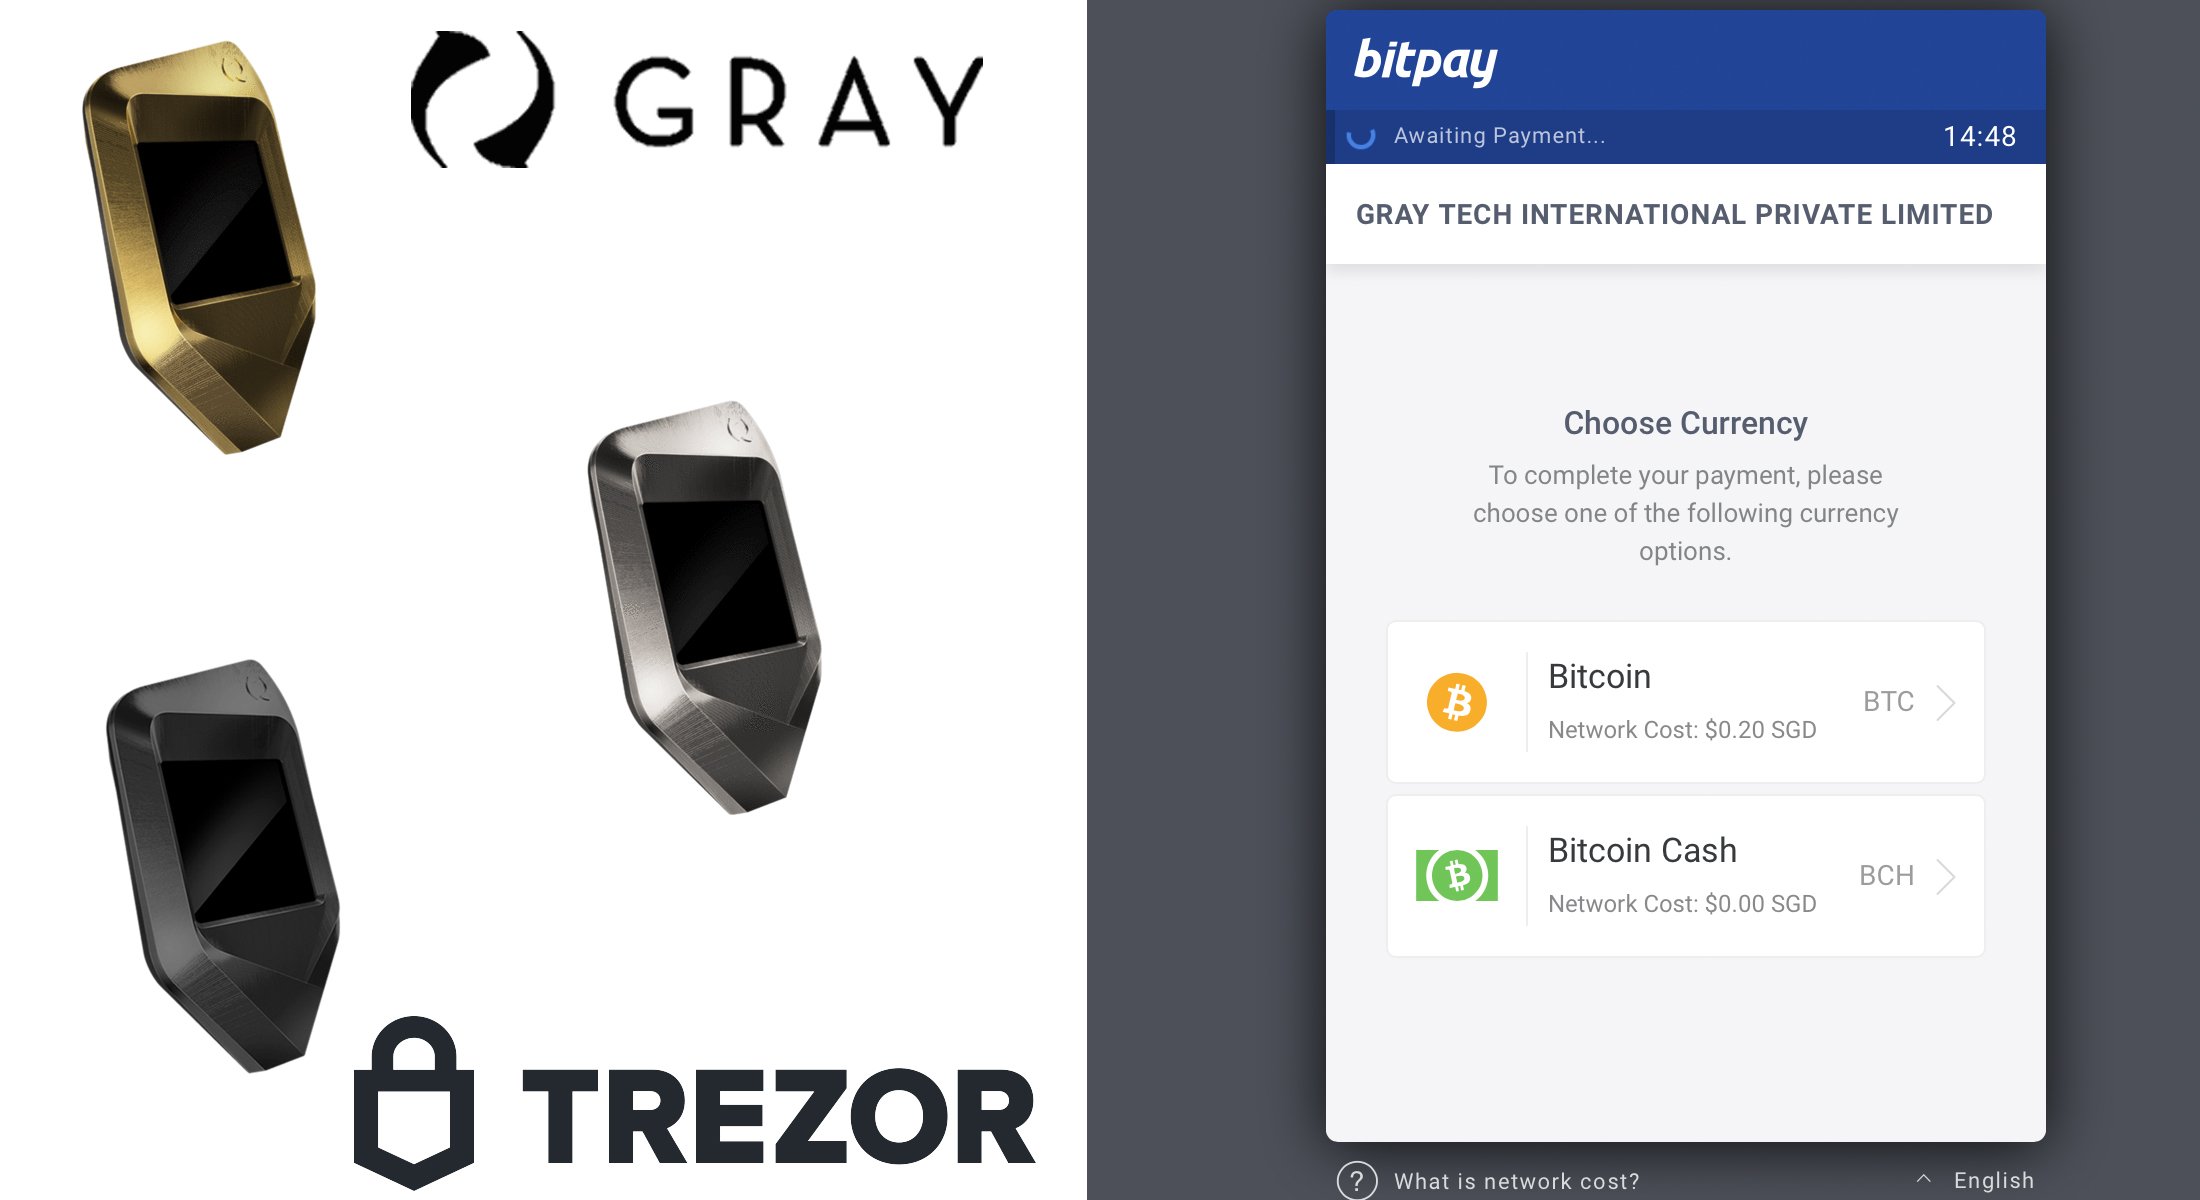 Trezor and Gray Release Corazon Series 'Luxury' Hardware Wallets